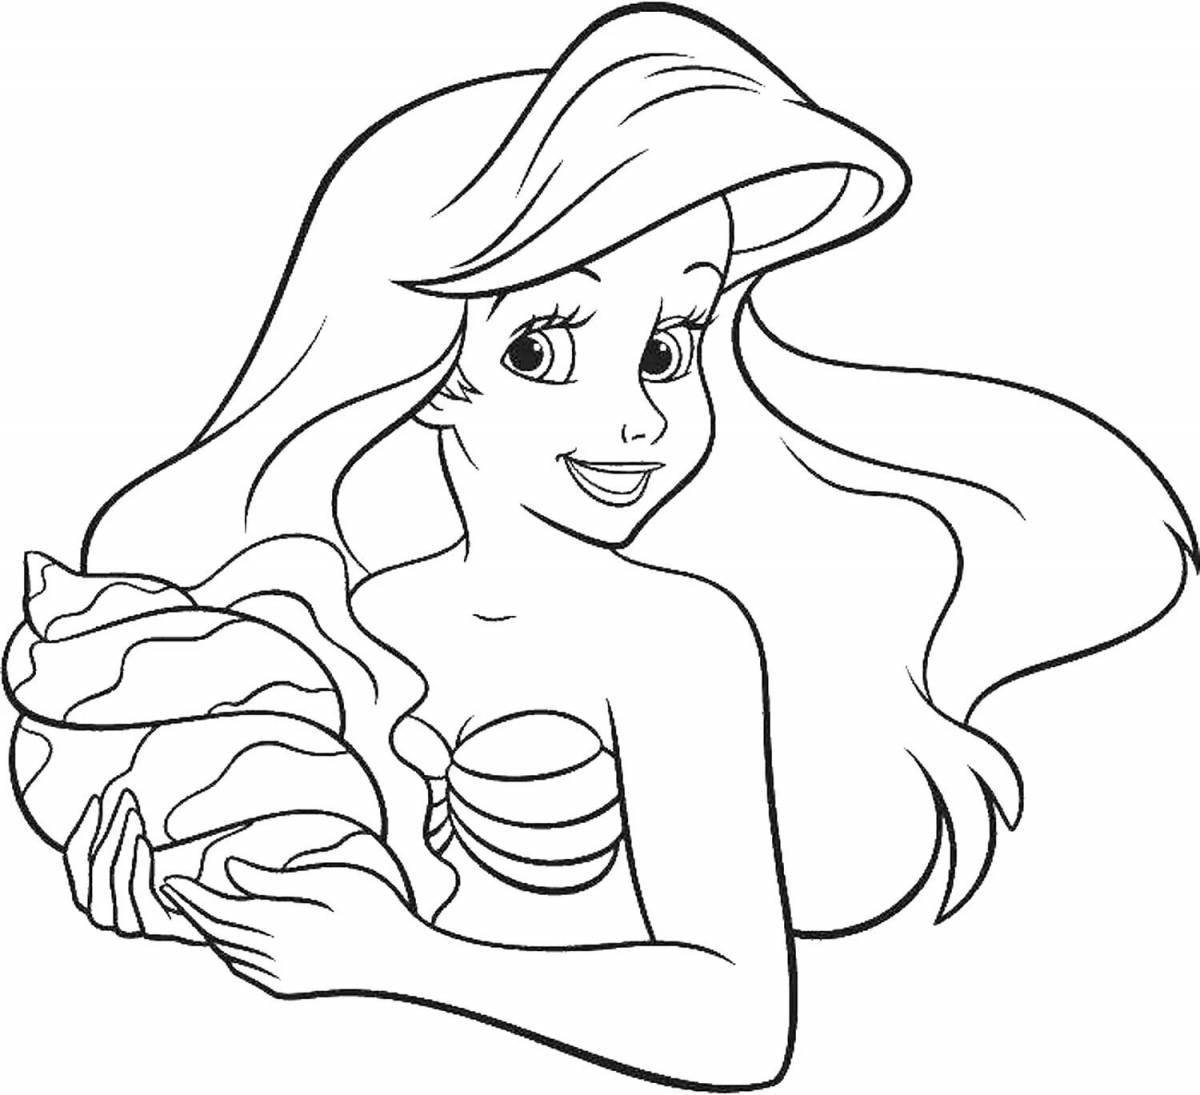 Magic coloring princess ariel the little mermaid